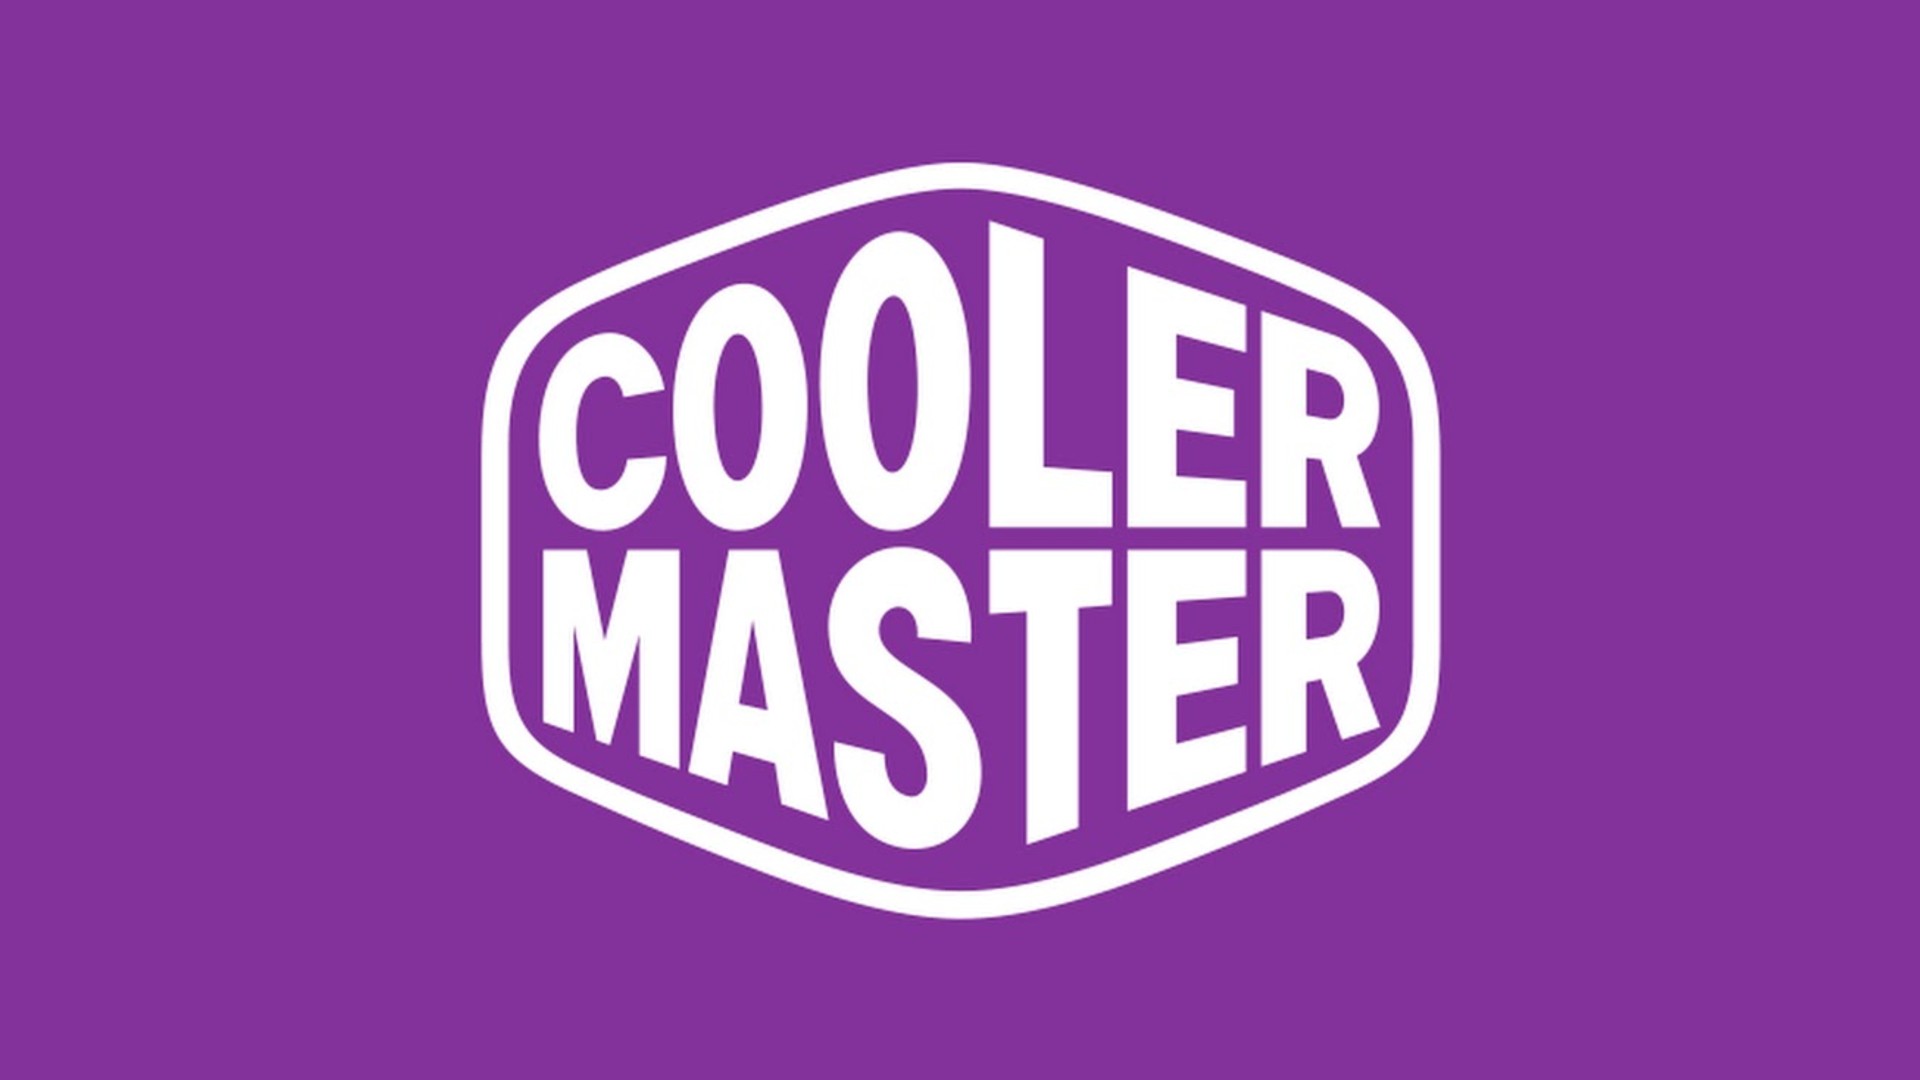 Cooler Master သည် တုန်ခါနေသော ဂိမ်းထိုင်ခုံအတွက် သင့်အား $2,000 ကောက်ခံလိုပါသည်။